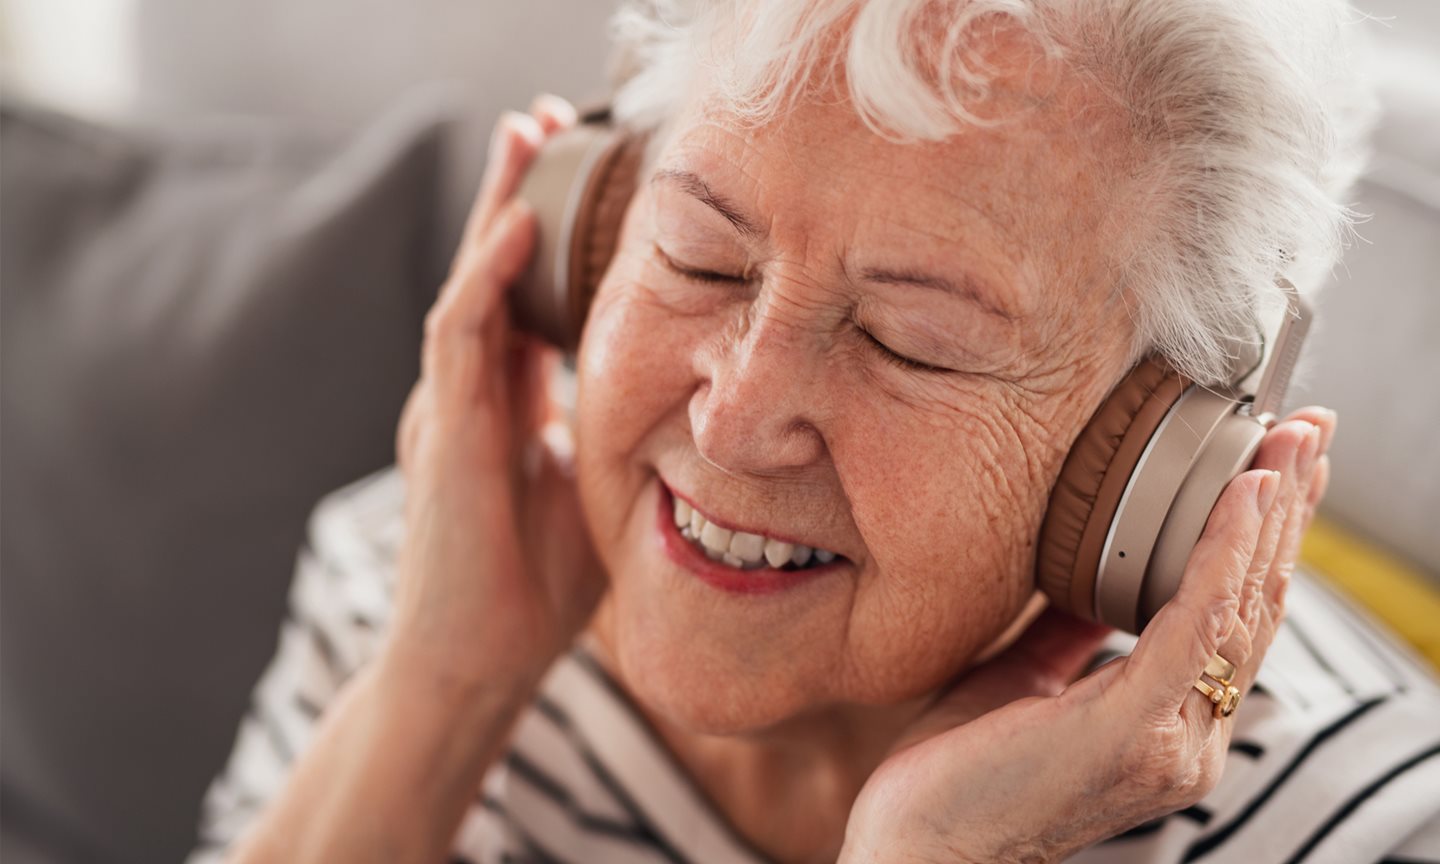 Woman listening to music through headphones.